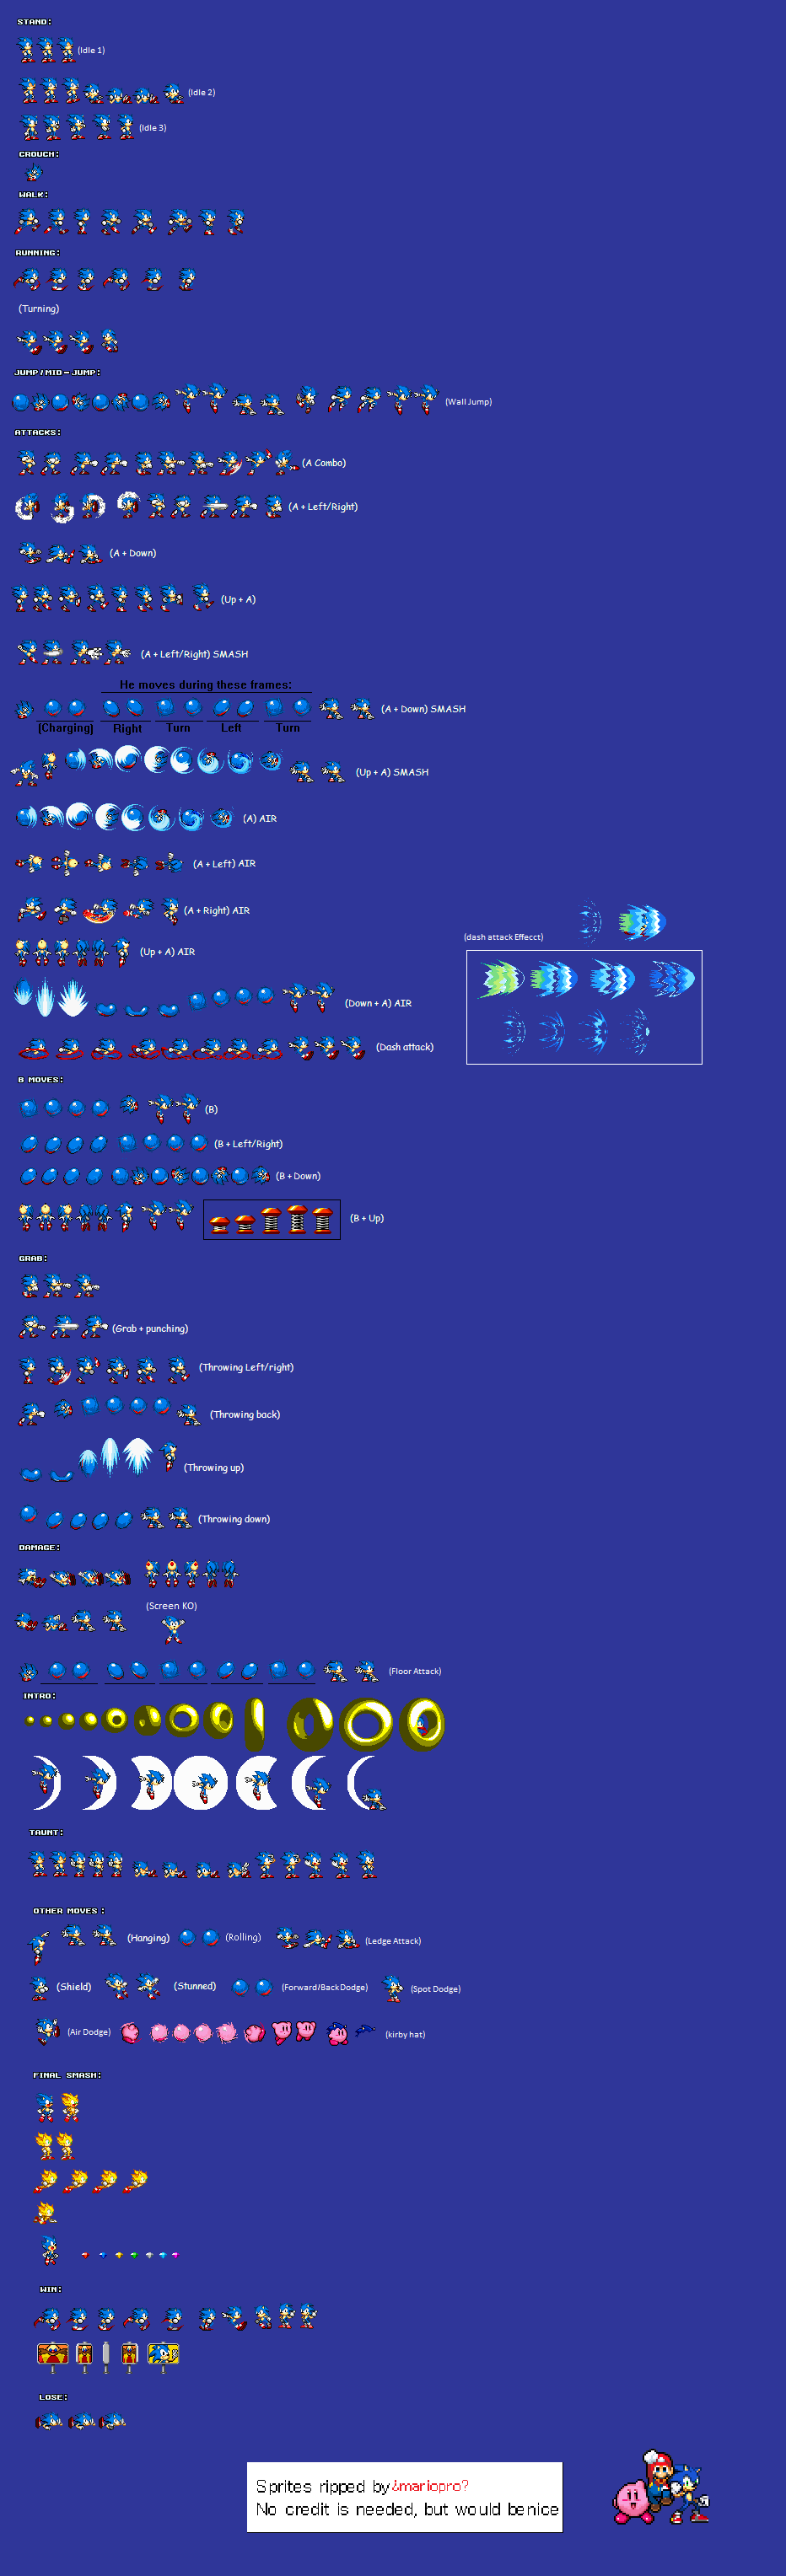 Classic Sonic Sprite Sheet by nicogamer337 on DeviantArt